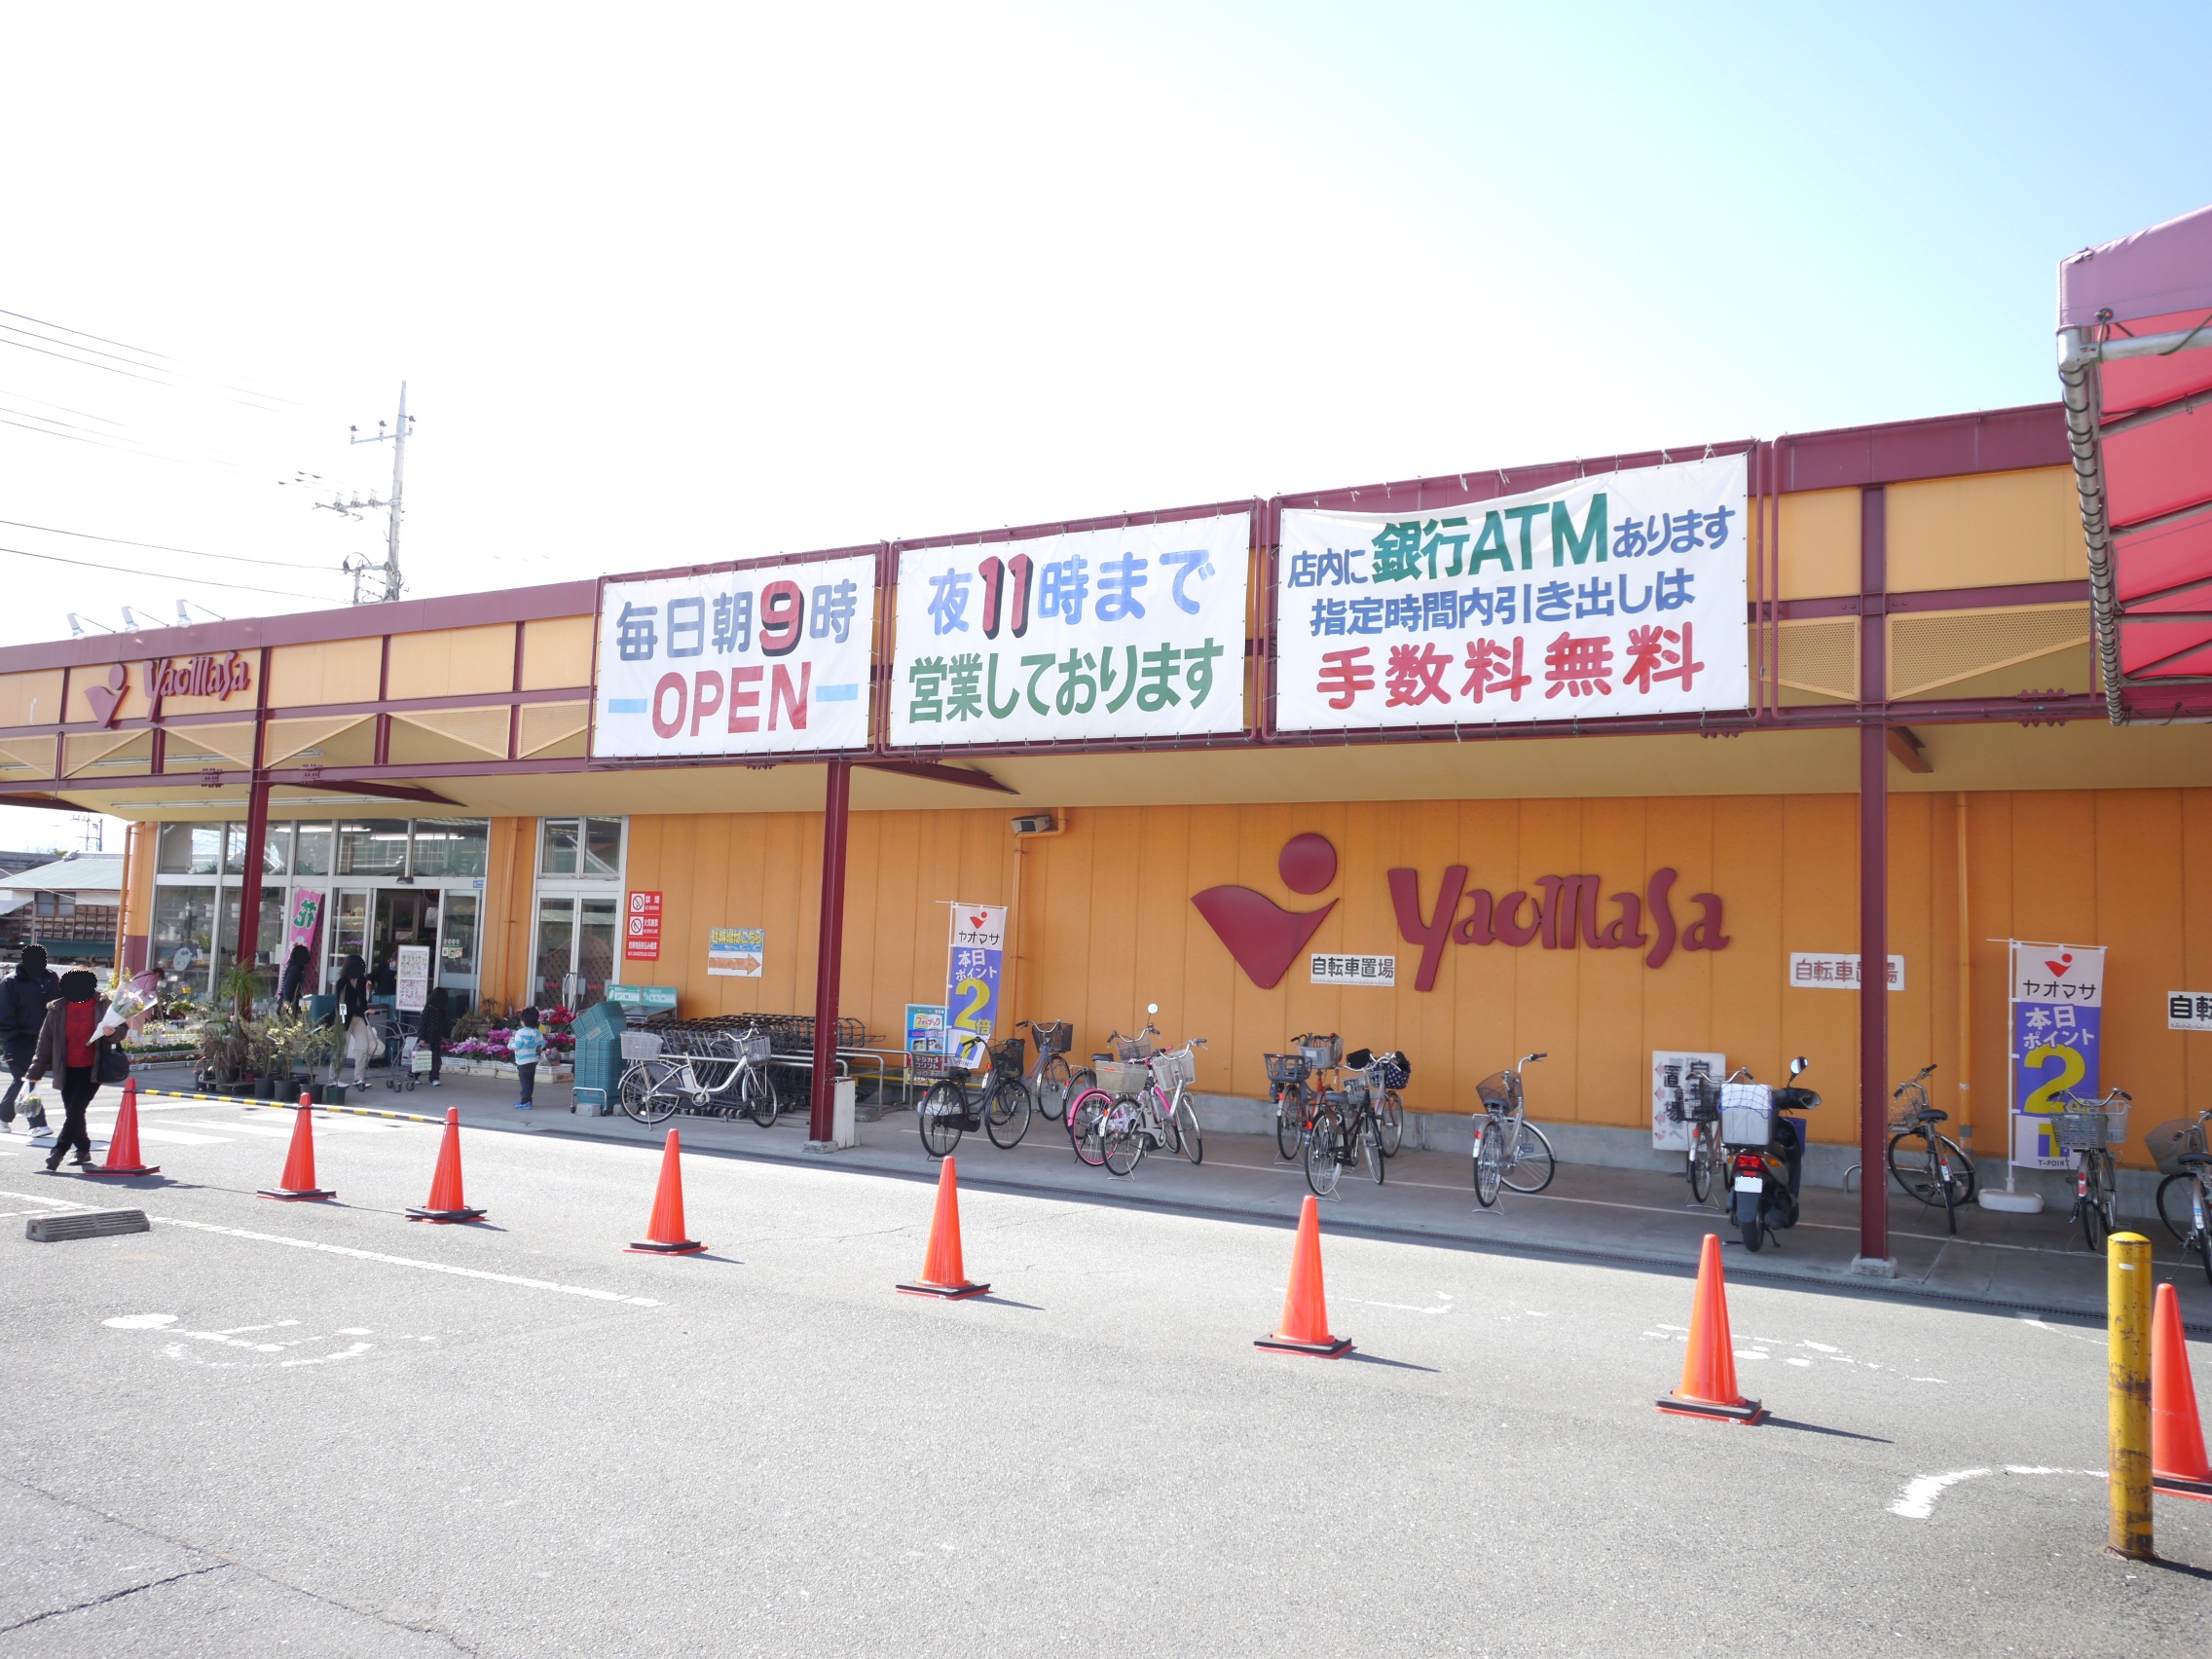 Supermarket. 300m until Yaomasa (super)